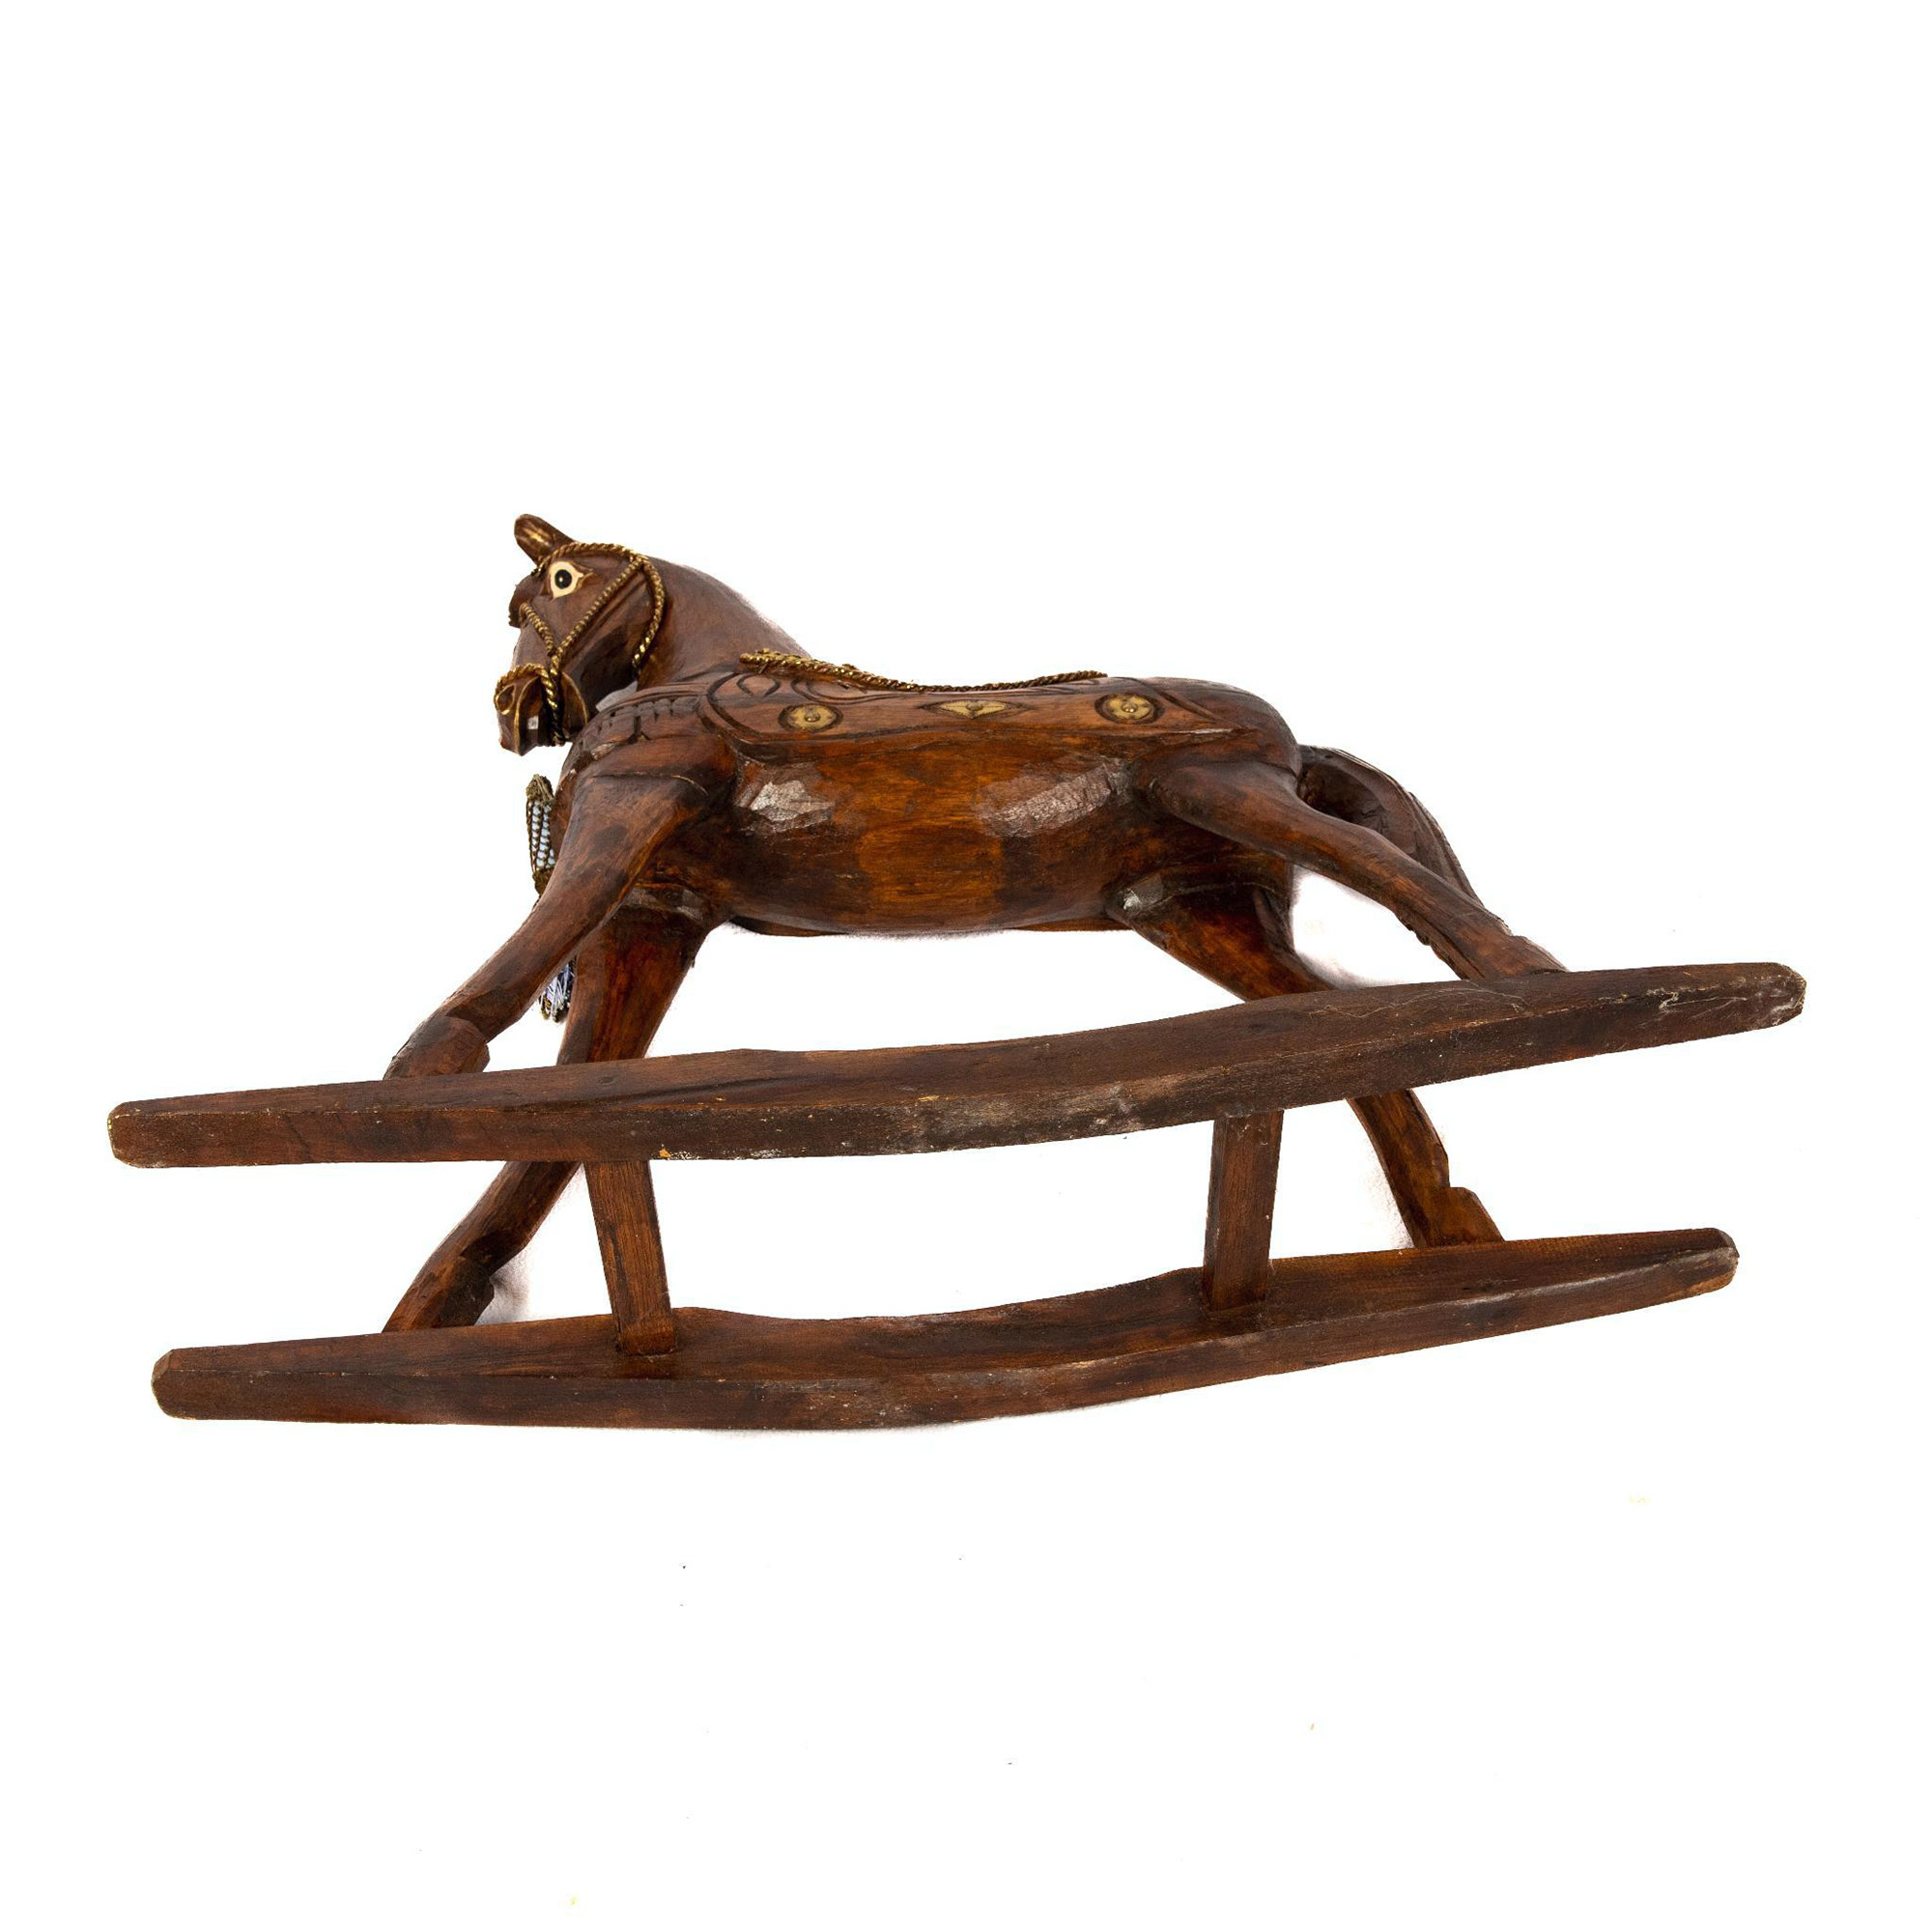 Decorative Wood-Stained Rocking Horse - Image 6 of 6